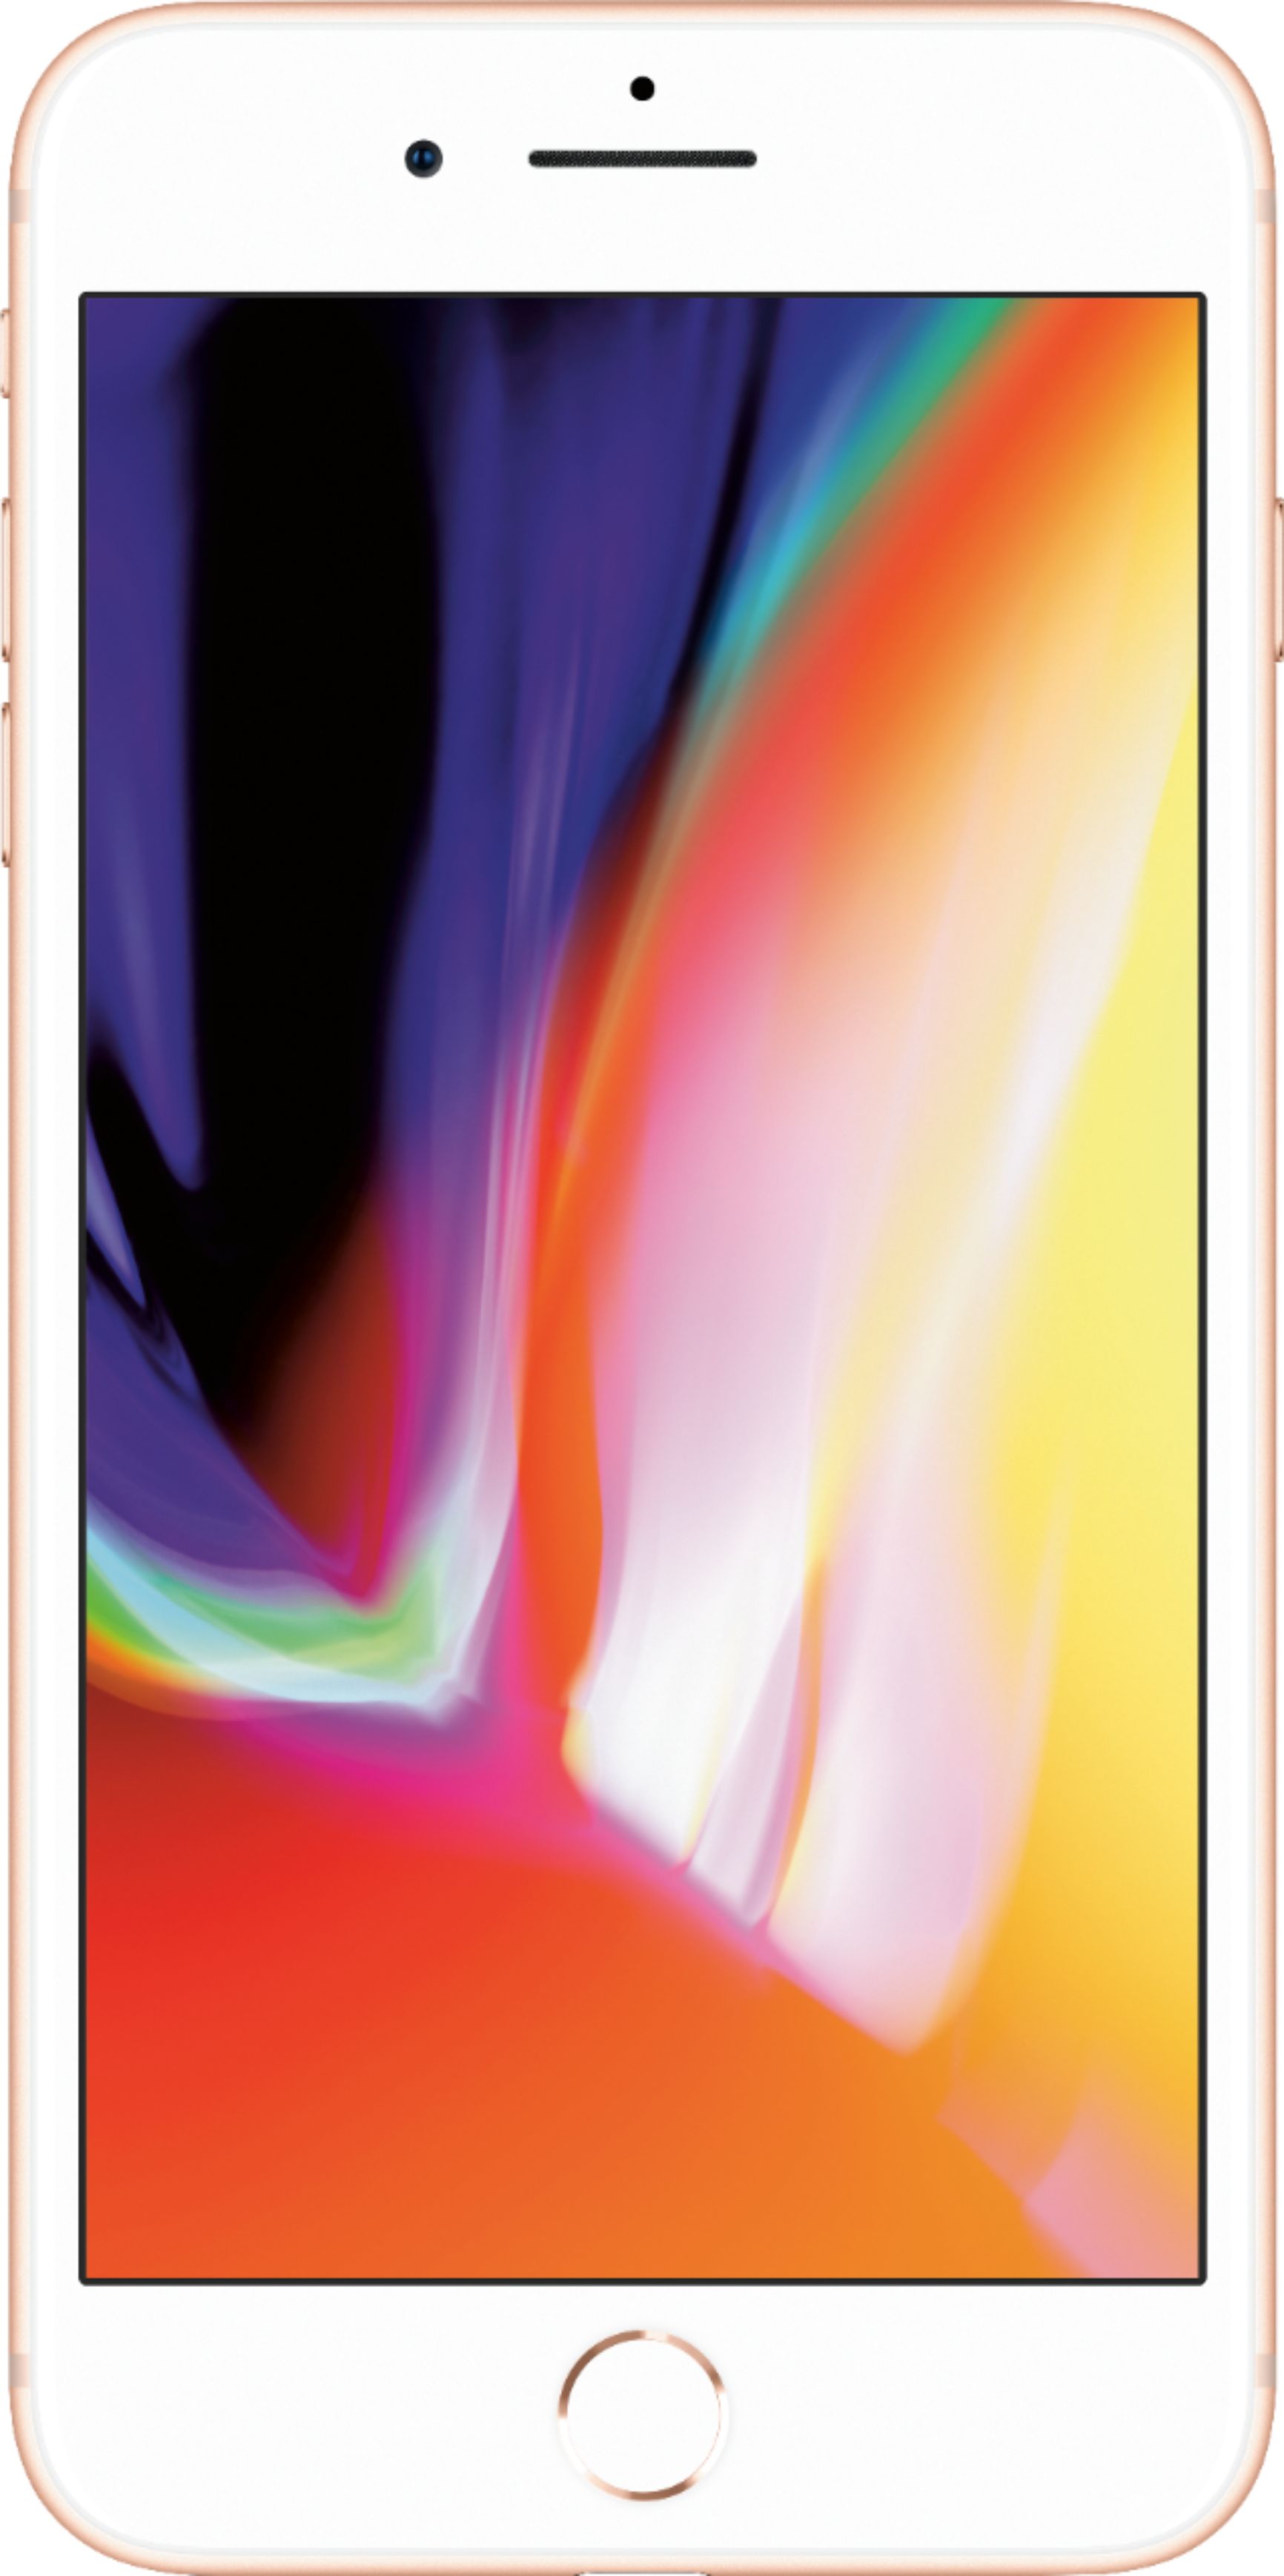 Apple iPhone 8 Plus 64GB Gold (Sprint) MQ8F2LL/A - Best Buy